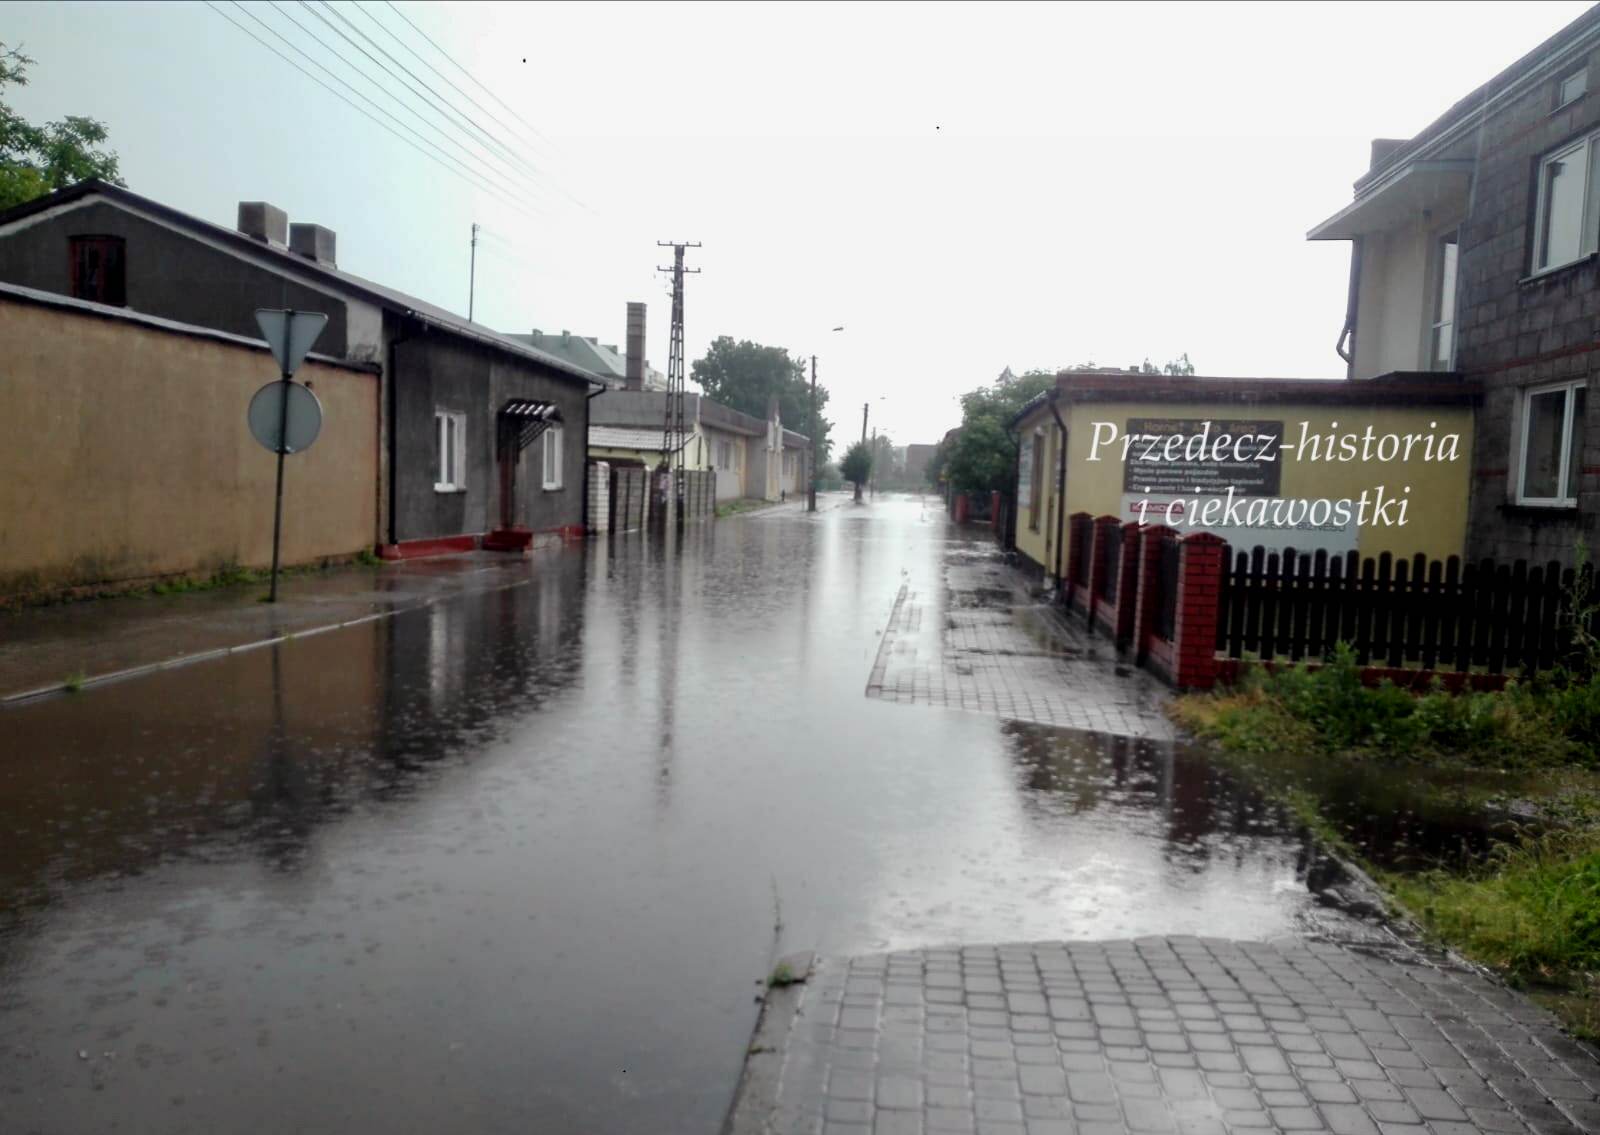 15-minutowa ulewa - ulice Przedcza zalane